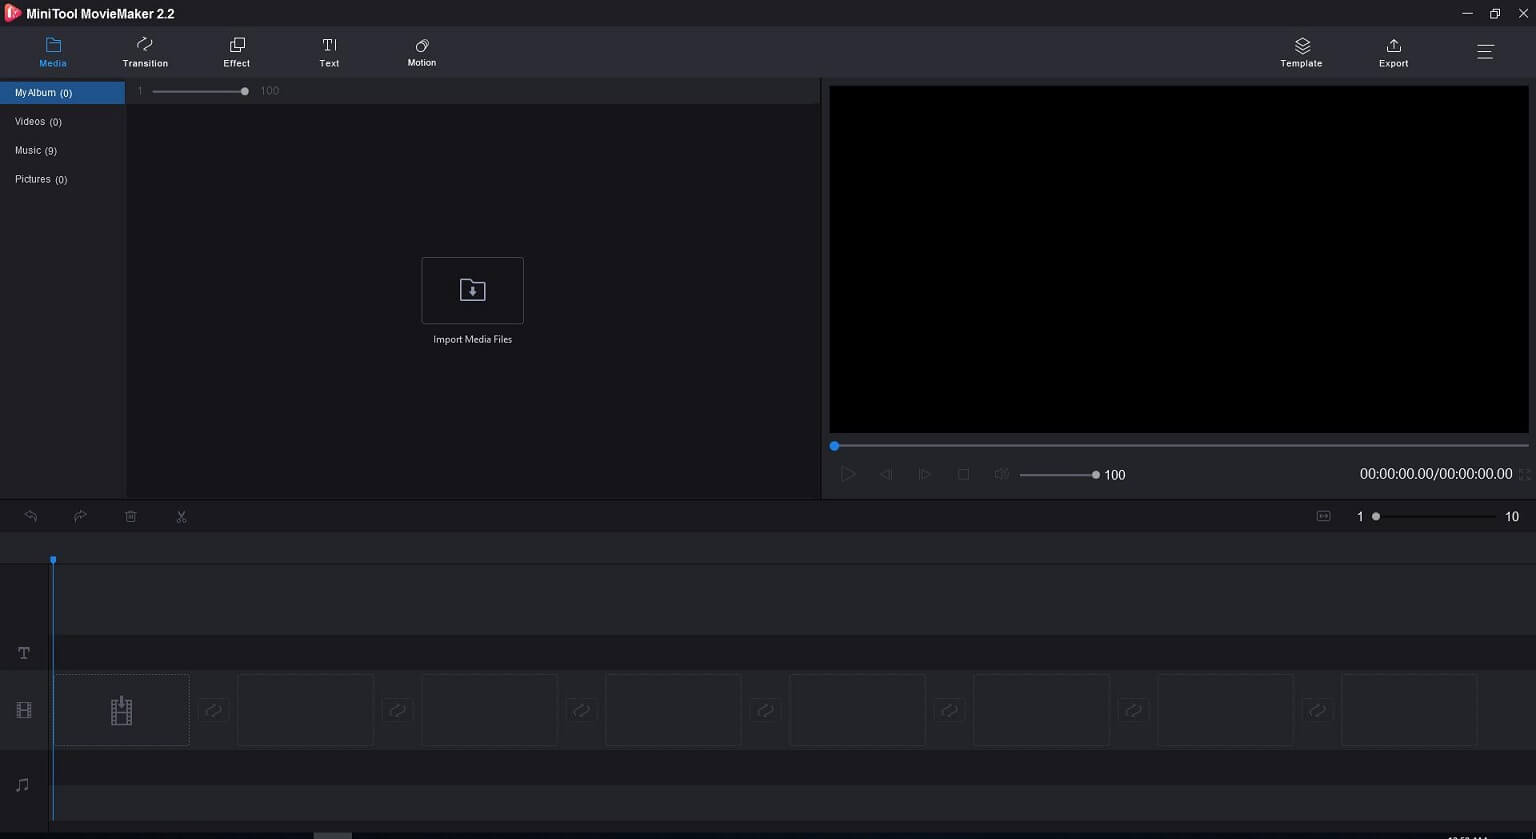 the main interface of MiniTool MovieMaker